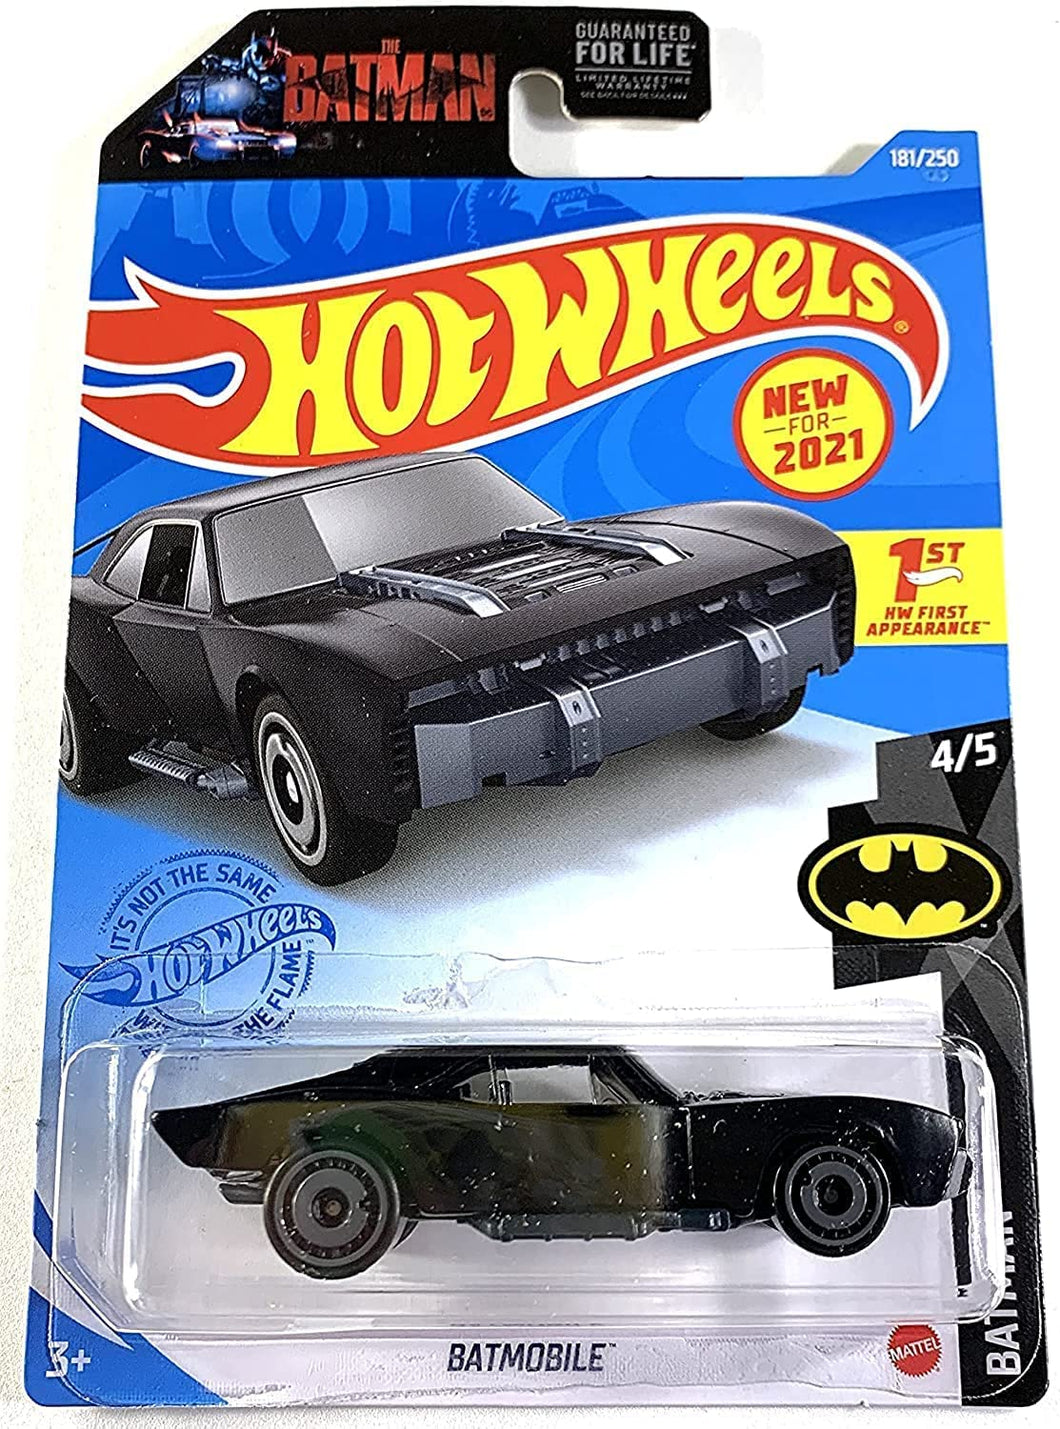 Hot Wheels The Batman Batmobile 1st New Appearance Batman 4/5 BLACK 181/250